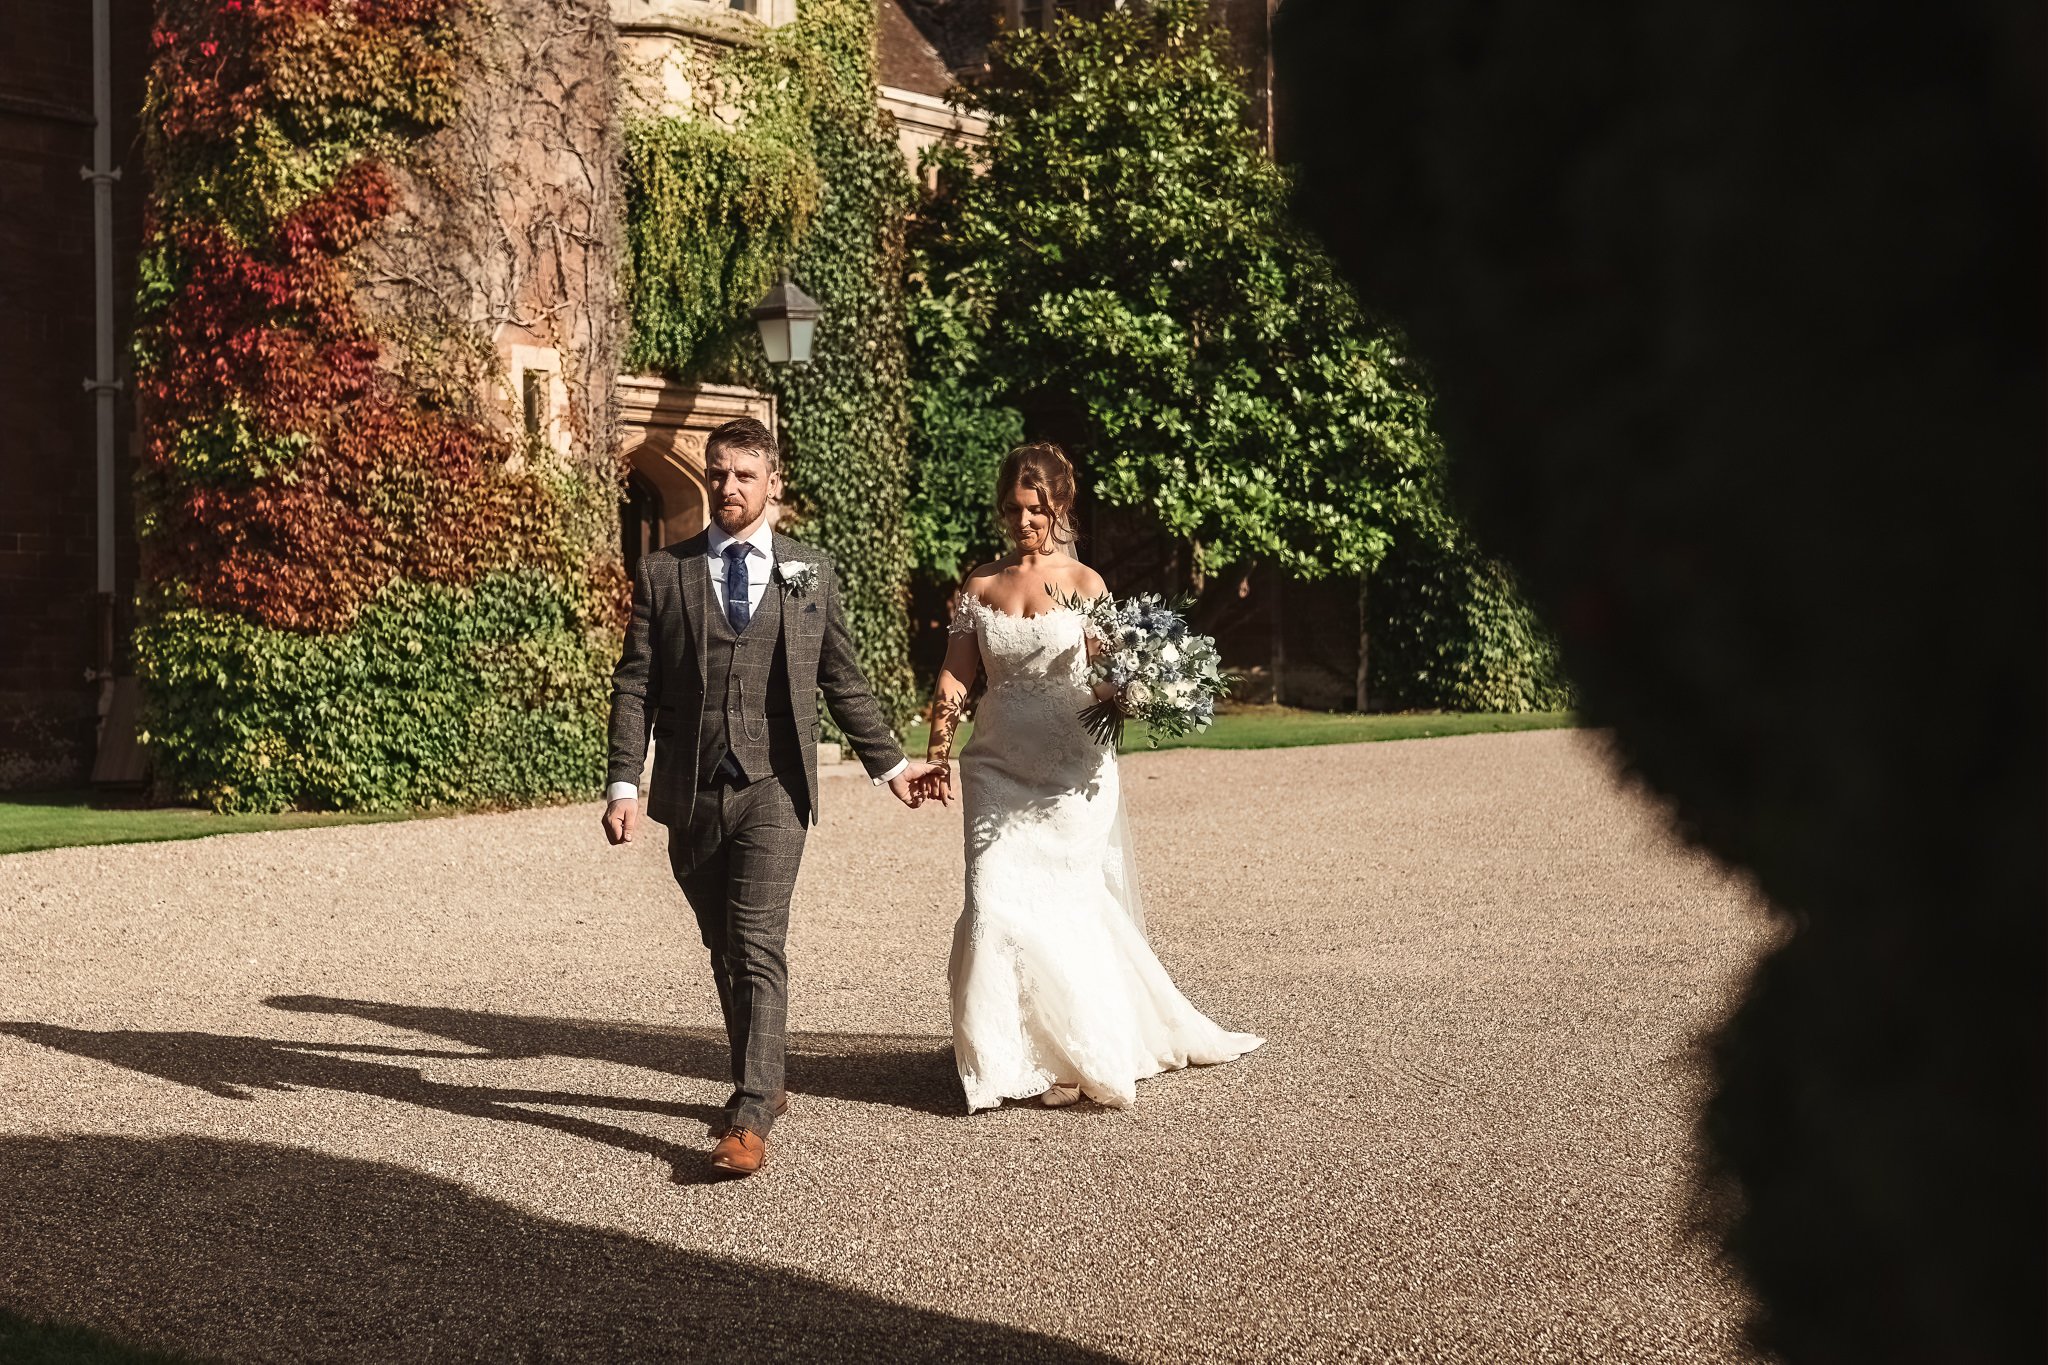 Katrina & Dan's wedding at St. Audries Park in Somerset-137.jpg